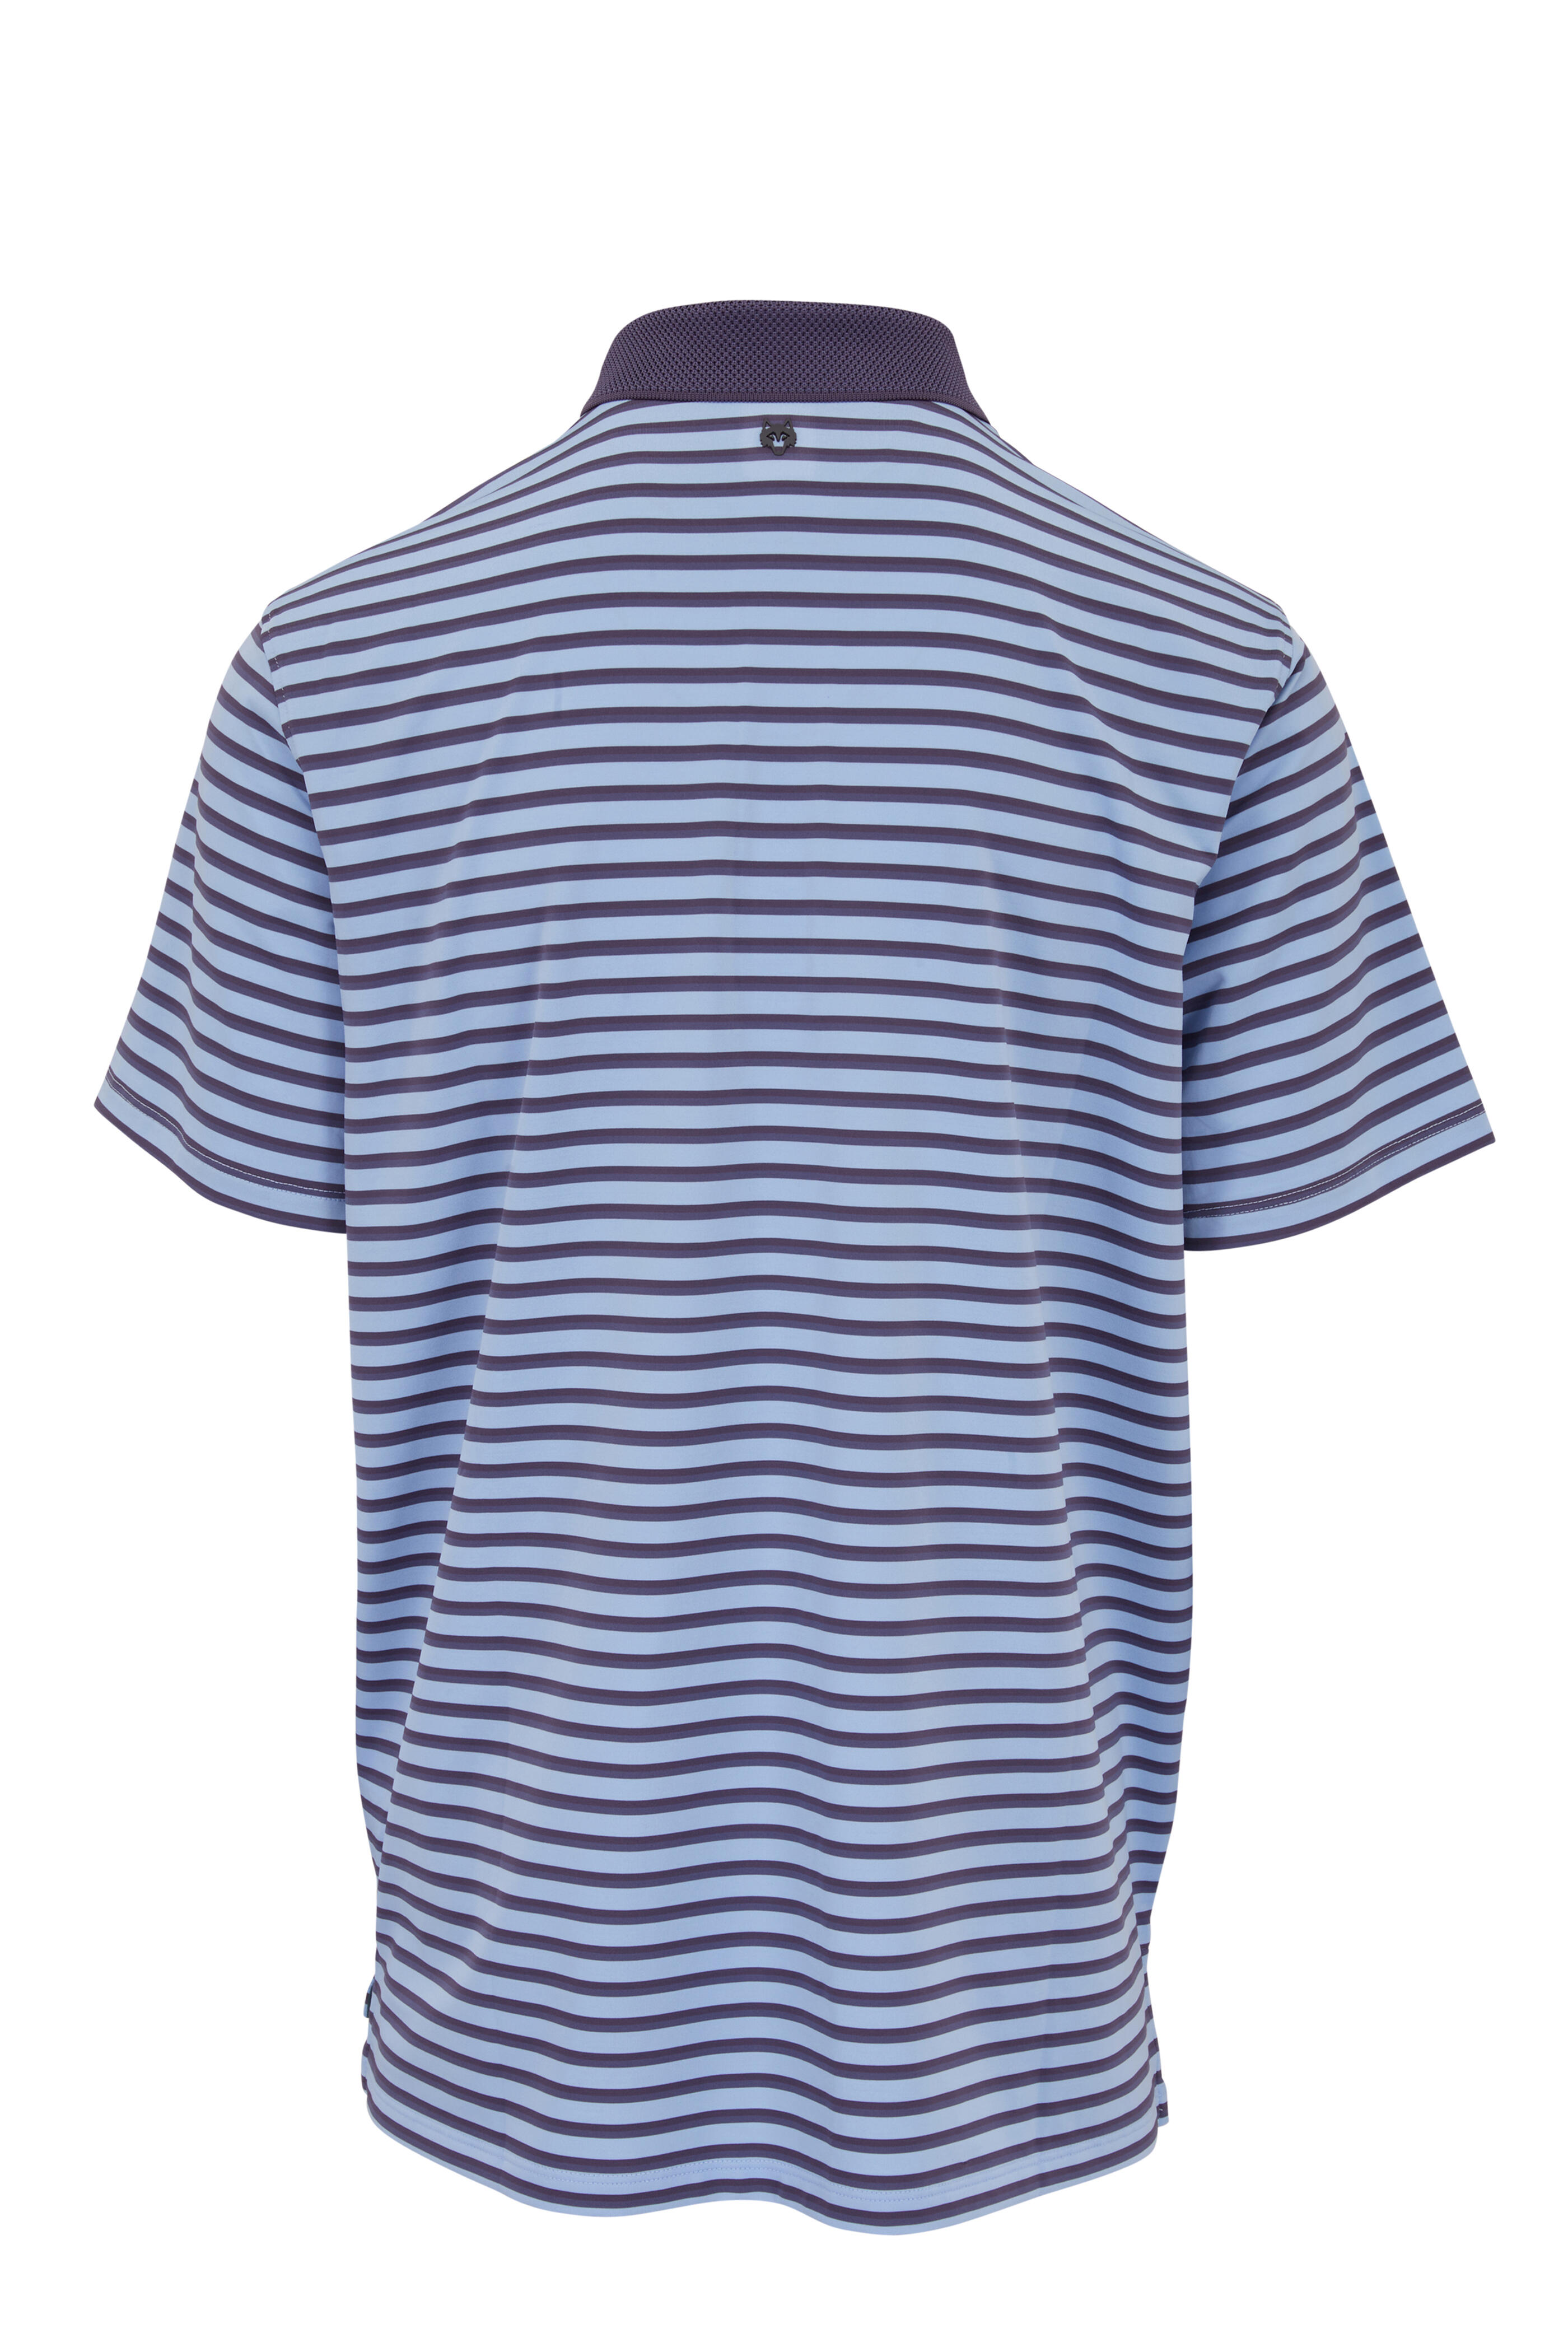 Greyson - Wasaga Savannah Blue Stripe Polo | Mitchell Stores